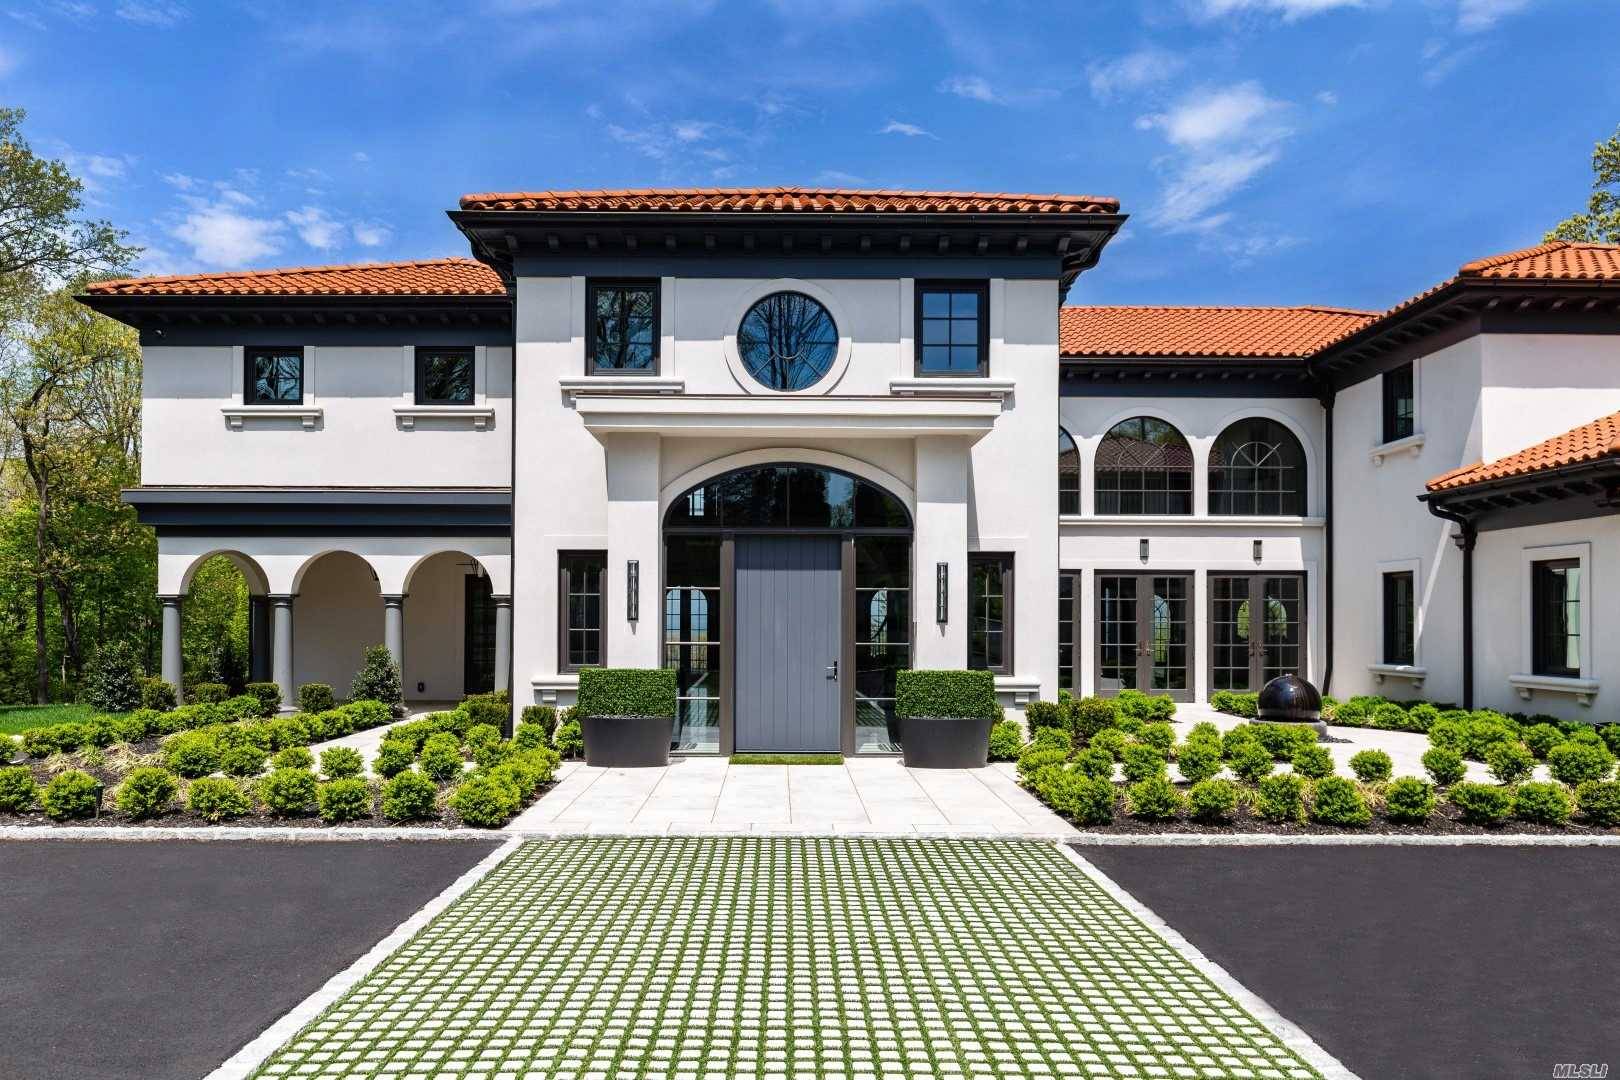 Ultra luxury brand new custom home by Cara Builders.